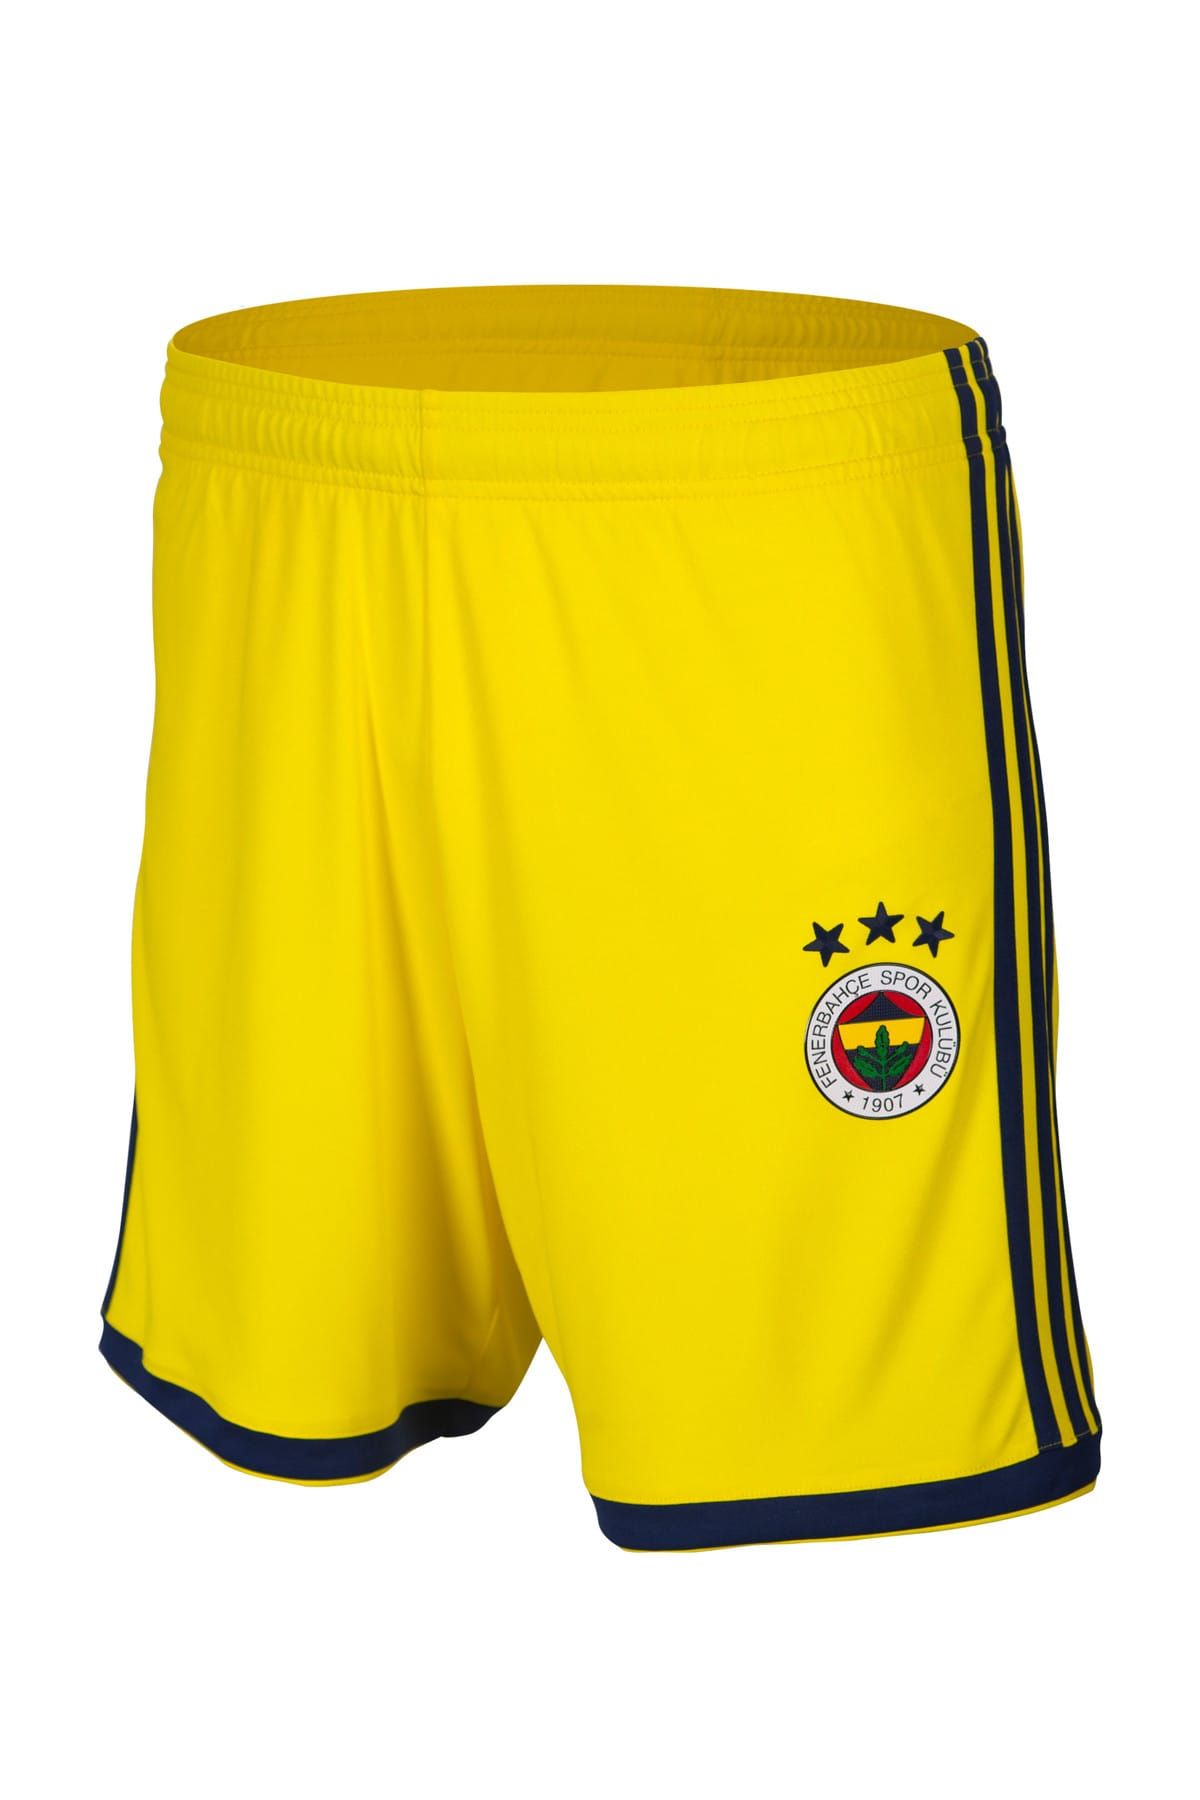 Fenerbahçe FB 19 SARI MAÇ ŞORT